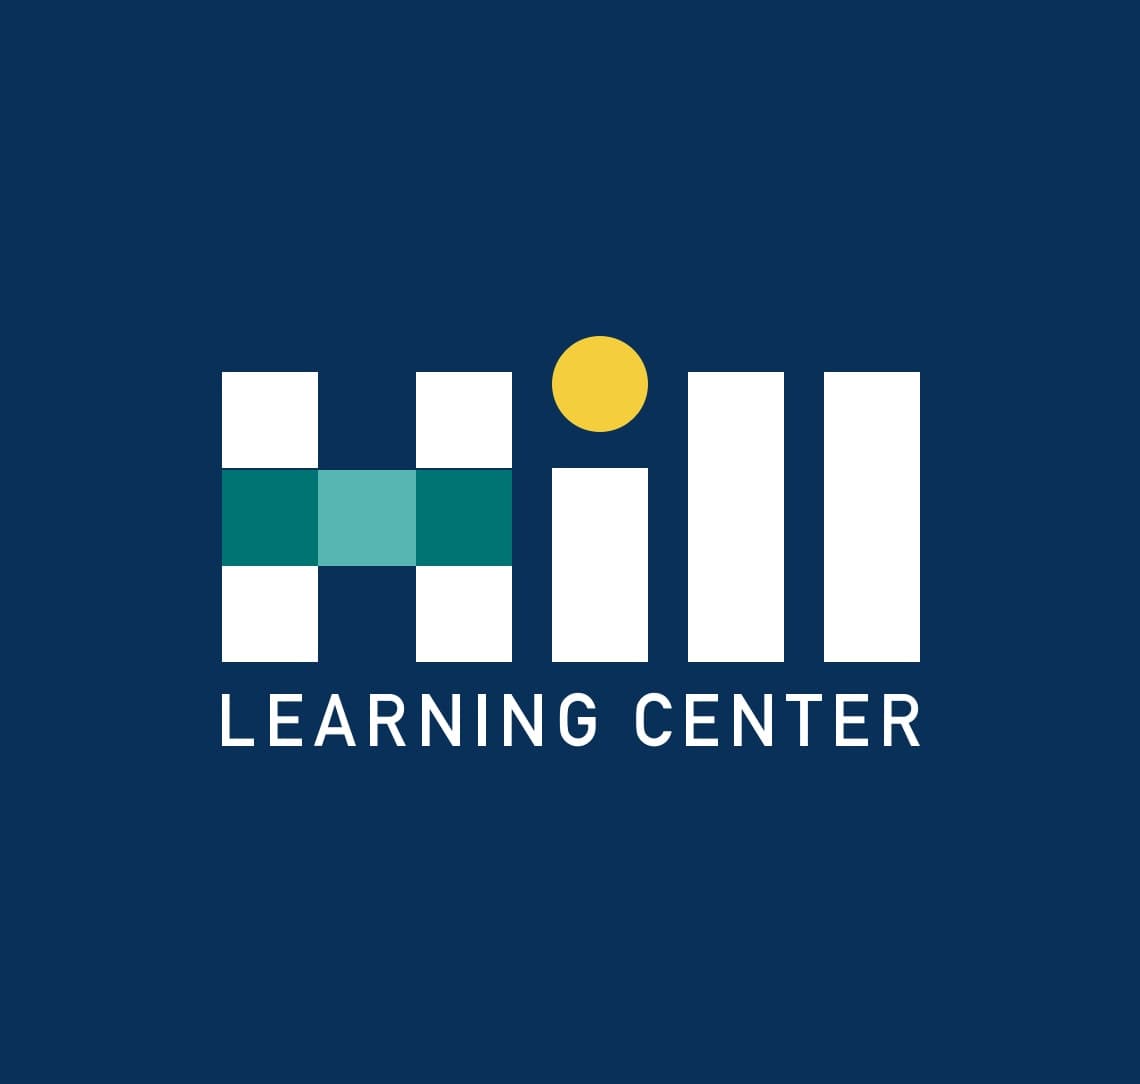 Hill Center logo